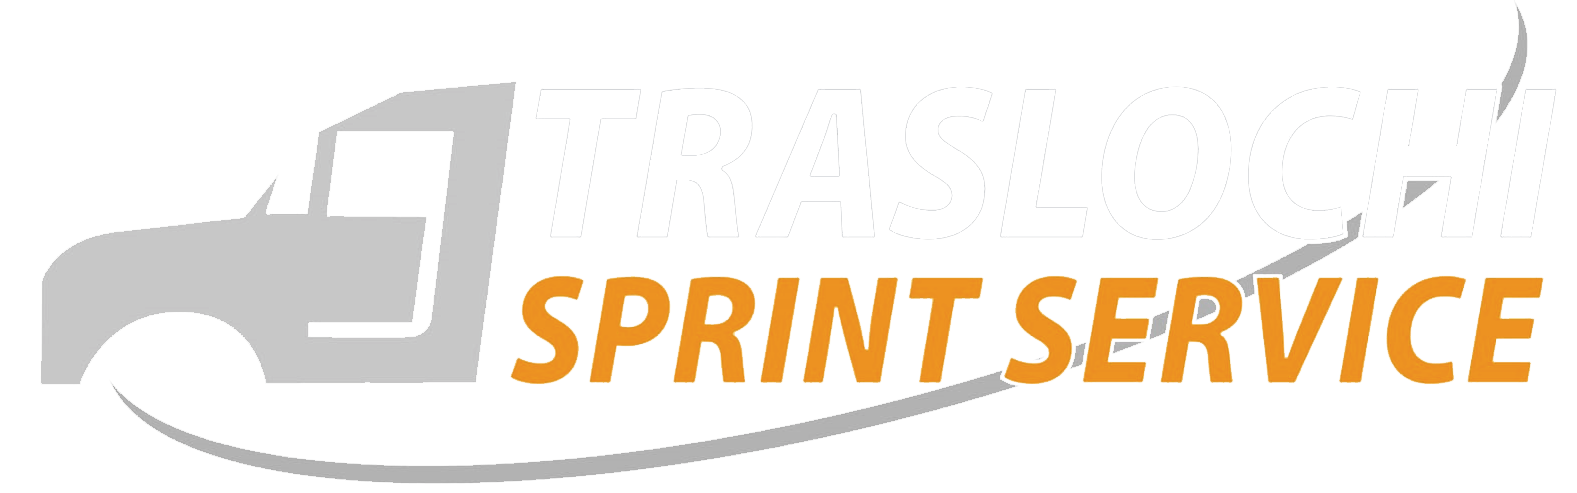 Traslochi Sprint Service logo